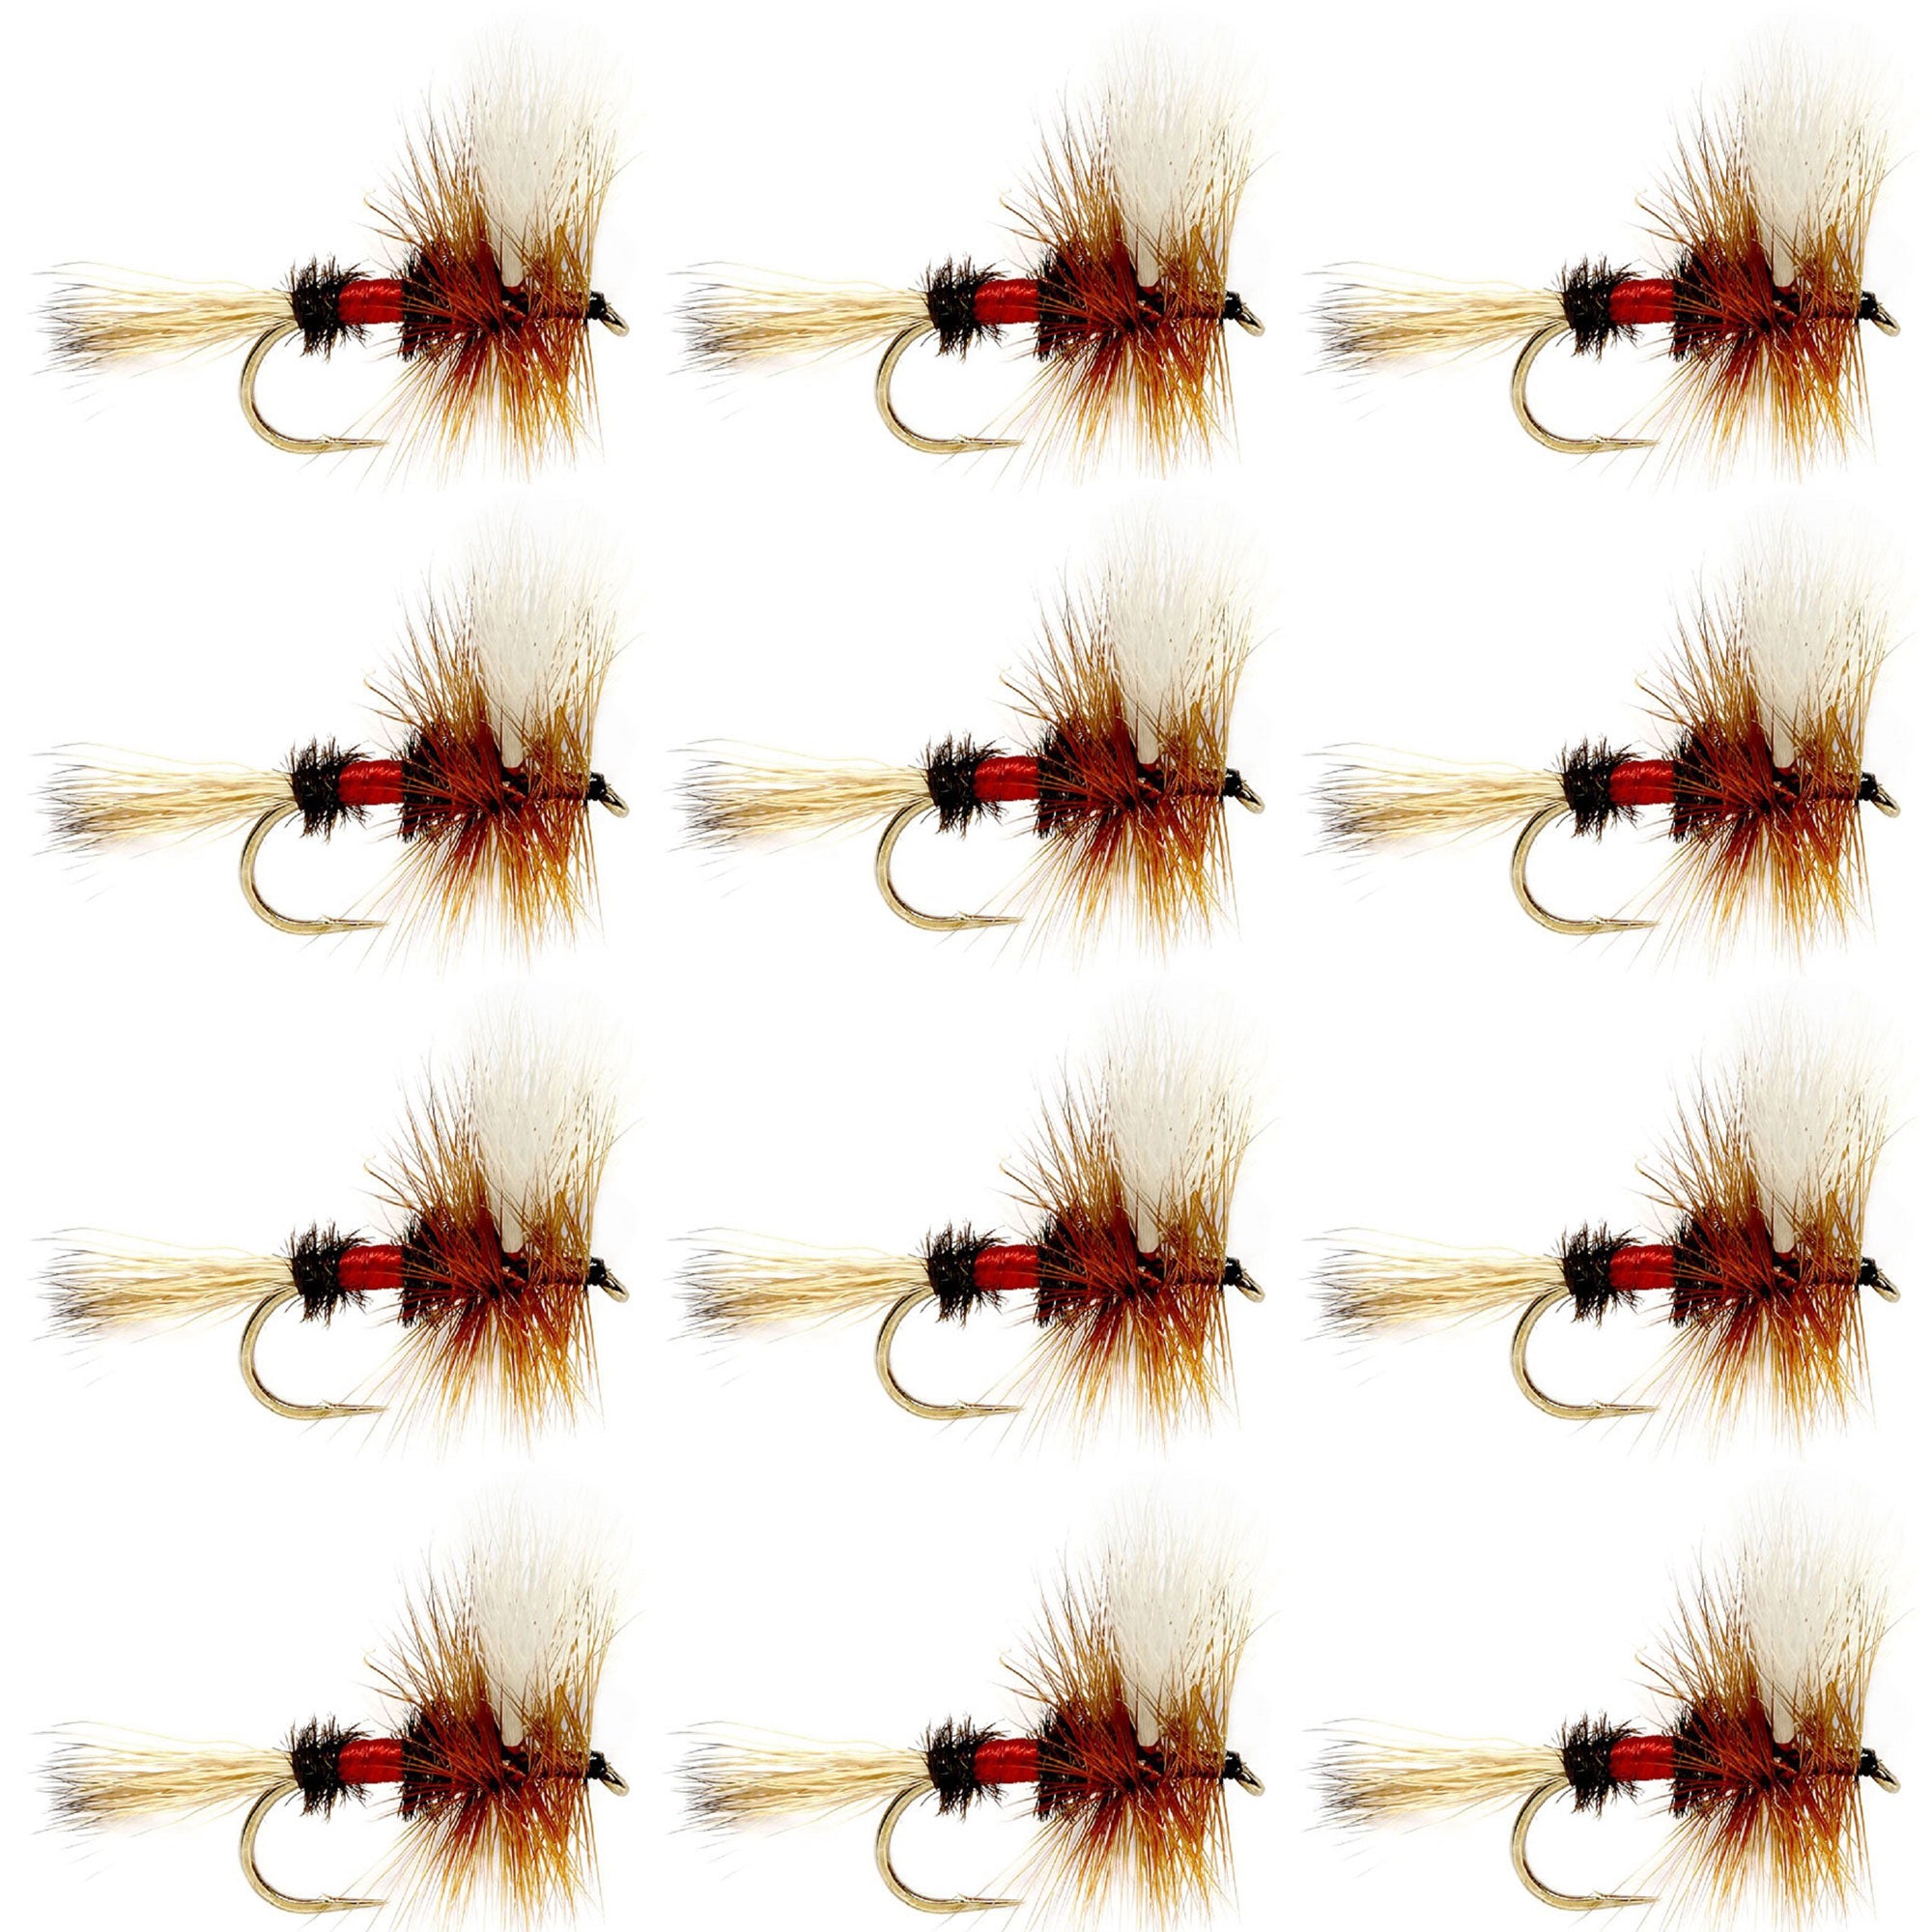 Royal Wulff Classic Trout Dry Fly Fishing Flies - Set of 12 Flies Size 12 - One Dozen